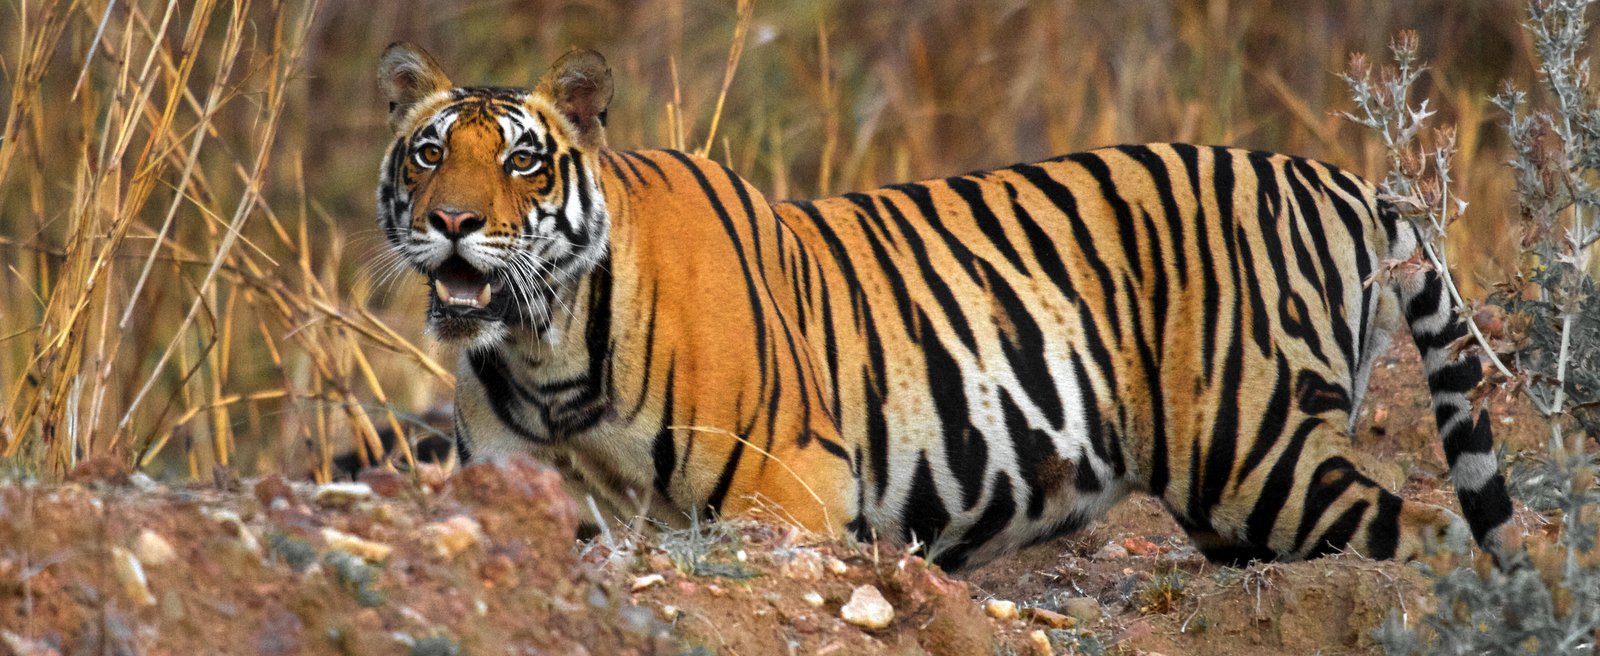 Tiger by Indrajit Latey